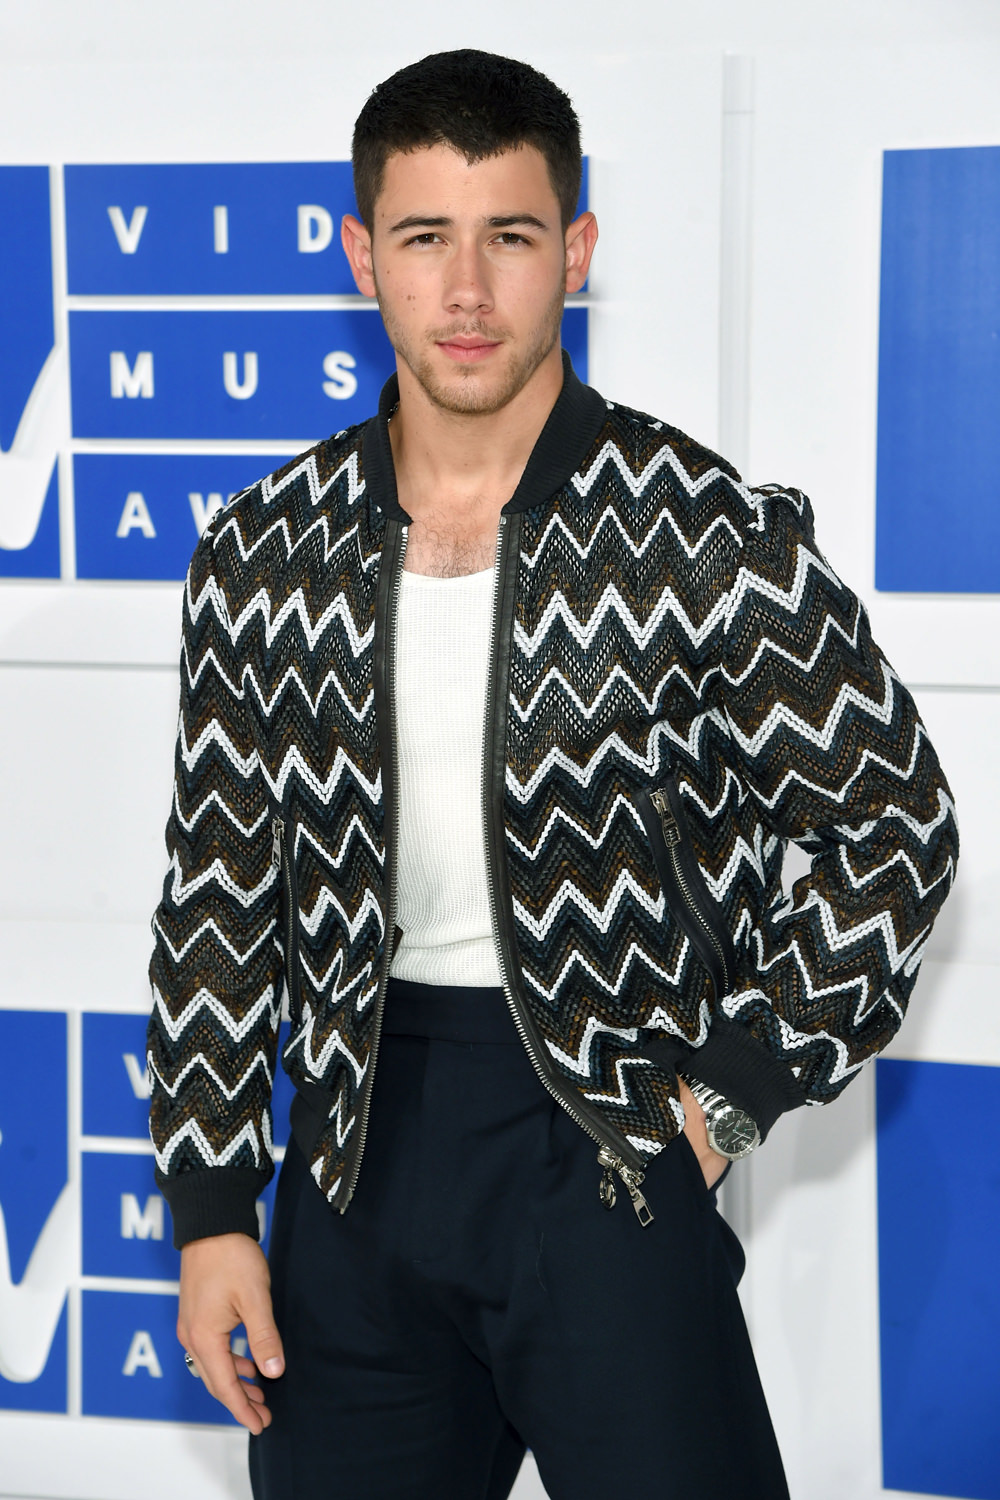 Nick-Jonas-2016-MTV-Video-Music-Awards-Red-Carpet-Fashion-Louis-Vuitton-Tom-Lorenzo-Site (1)